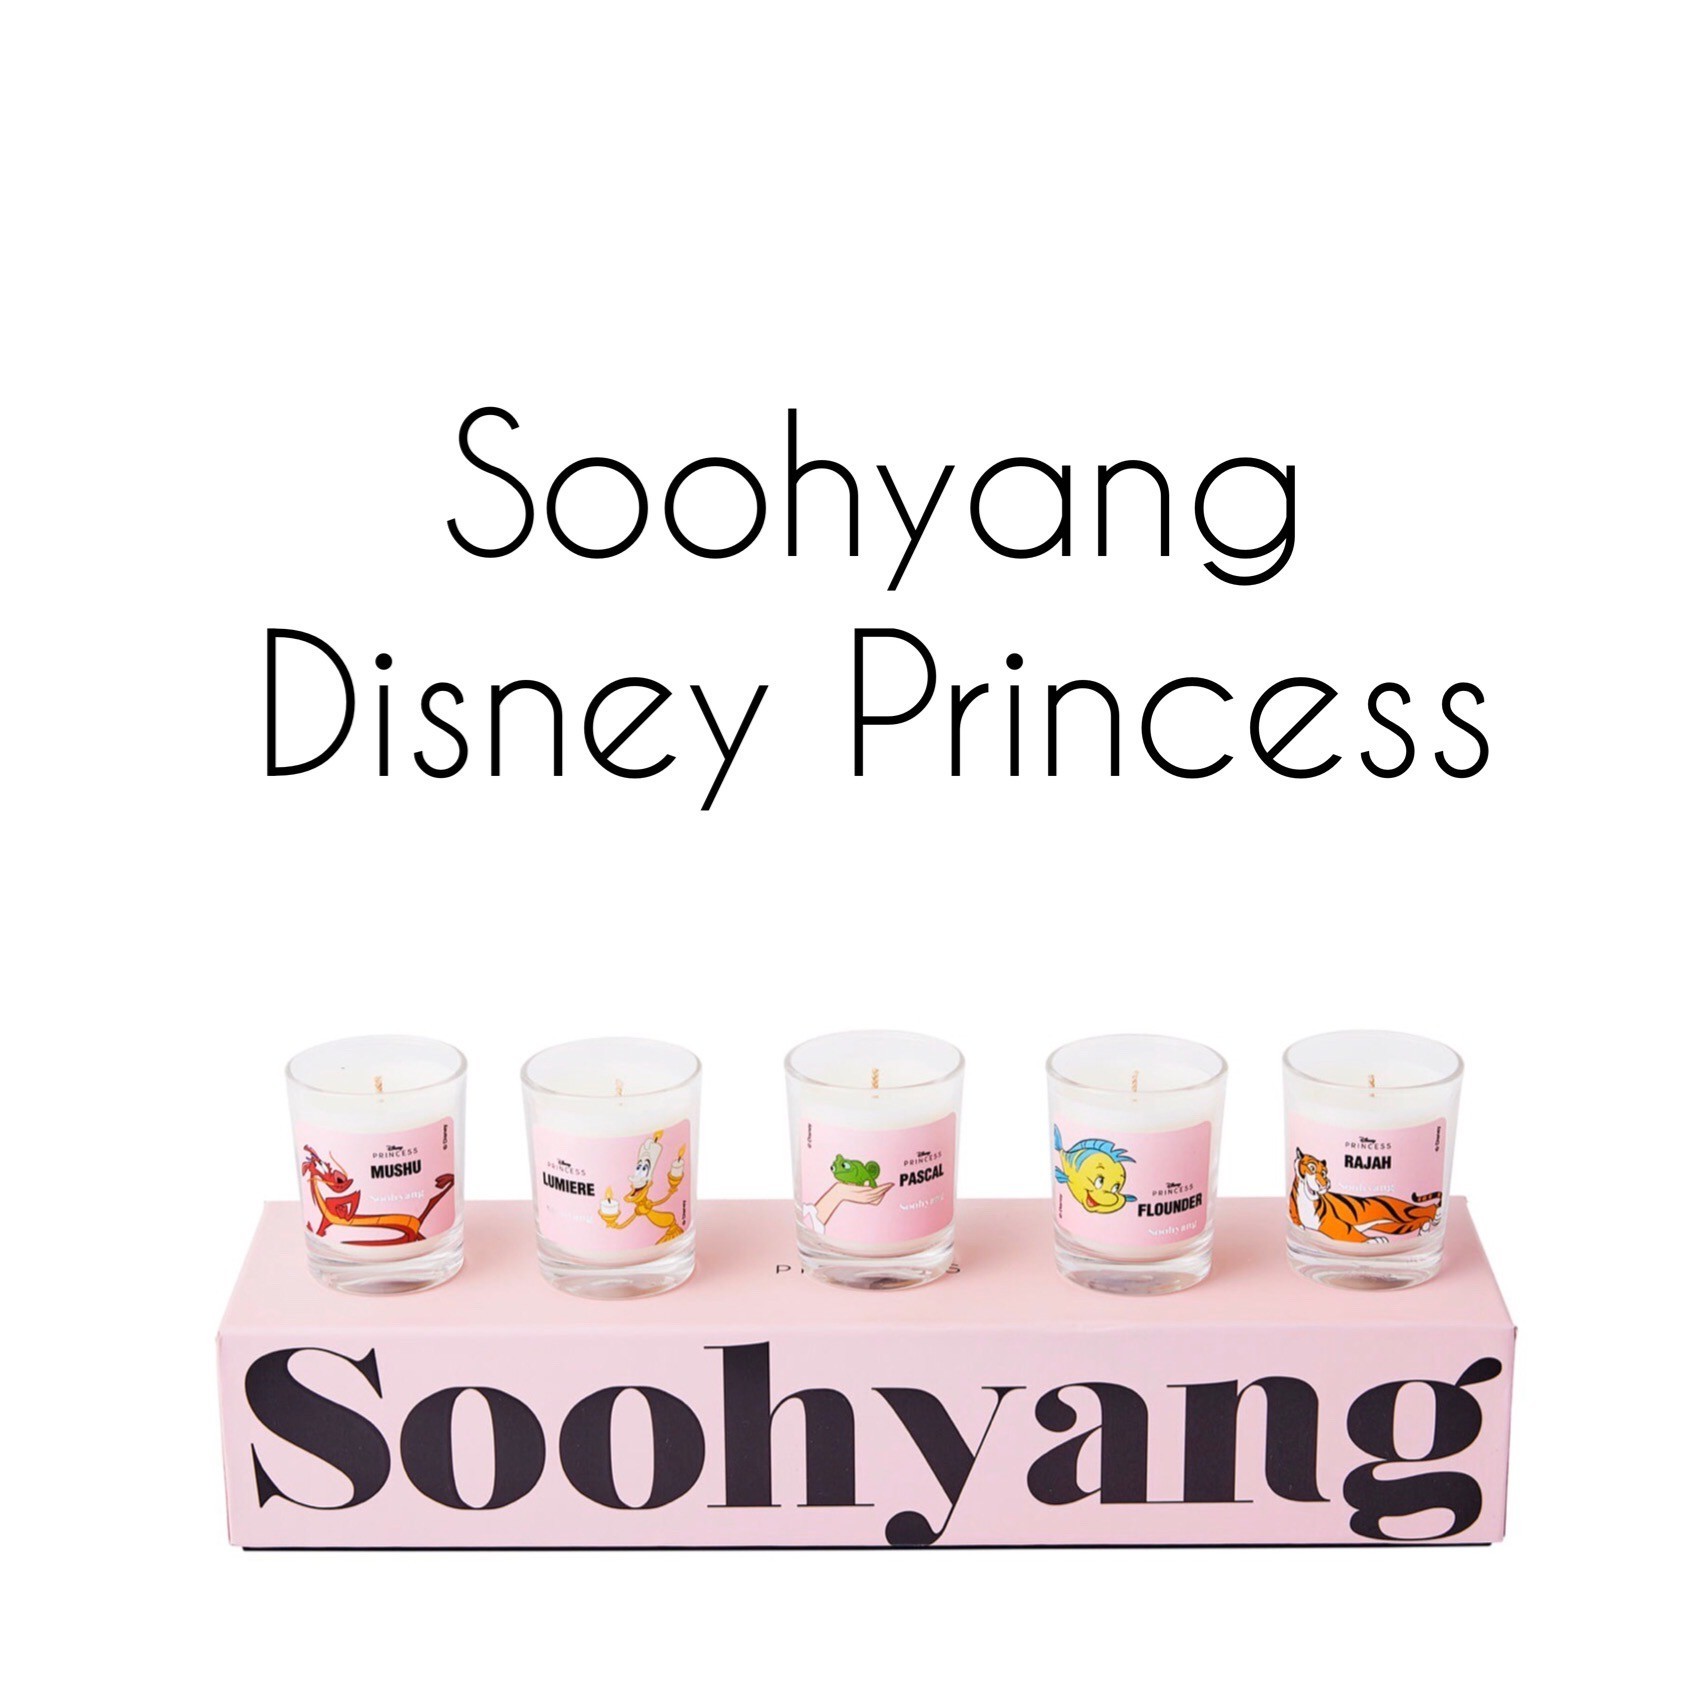 Soohyang x Disney Princess best friend